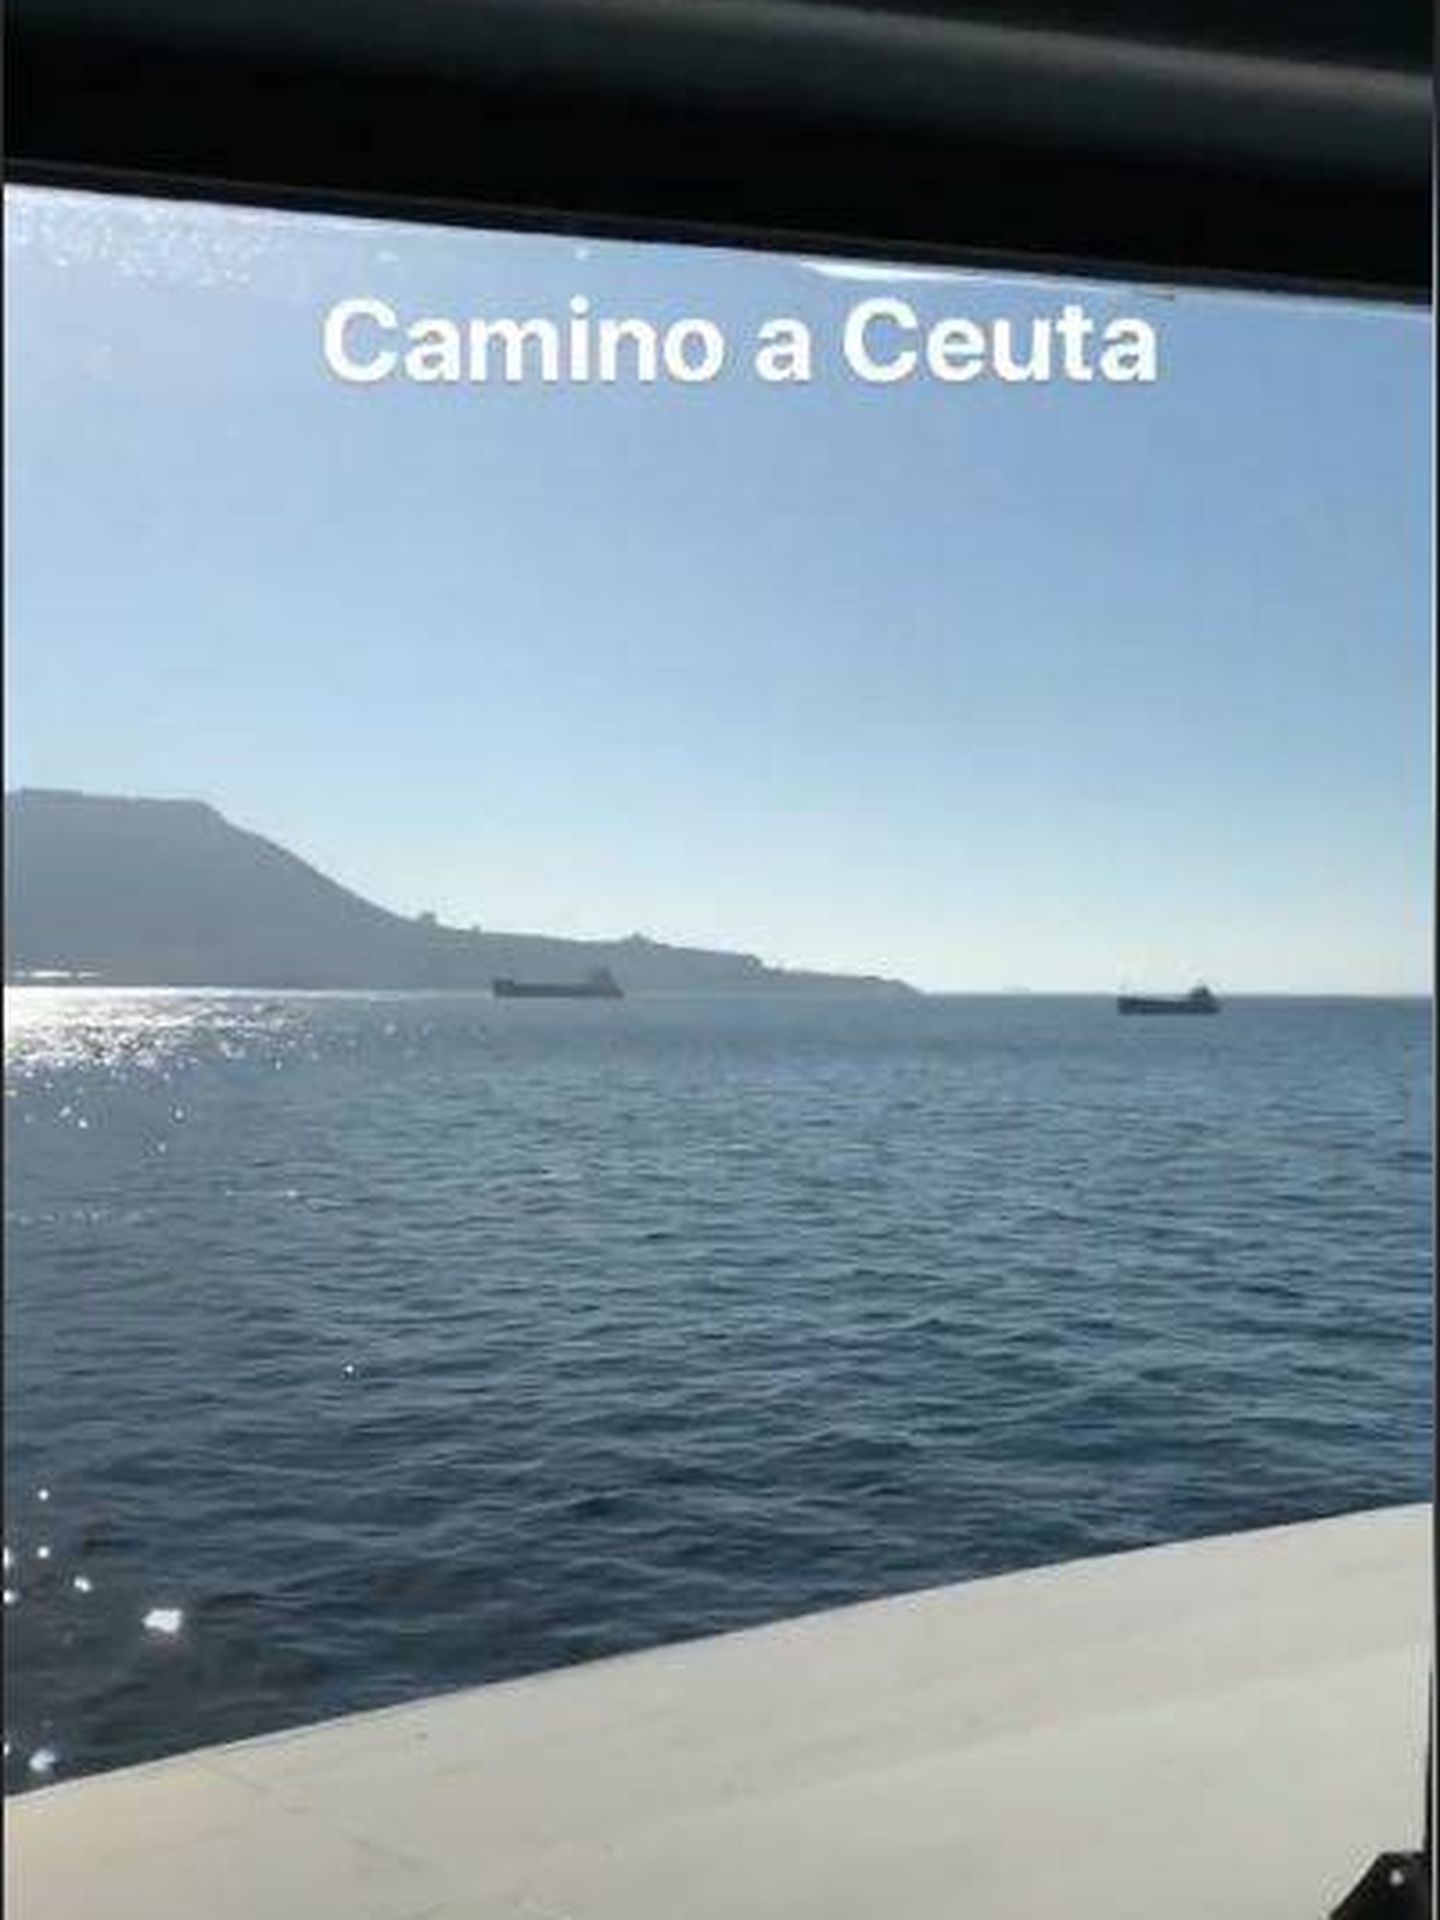 Rivera, camino a Ceuta. (Instagram)